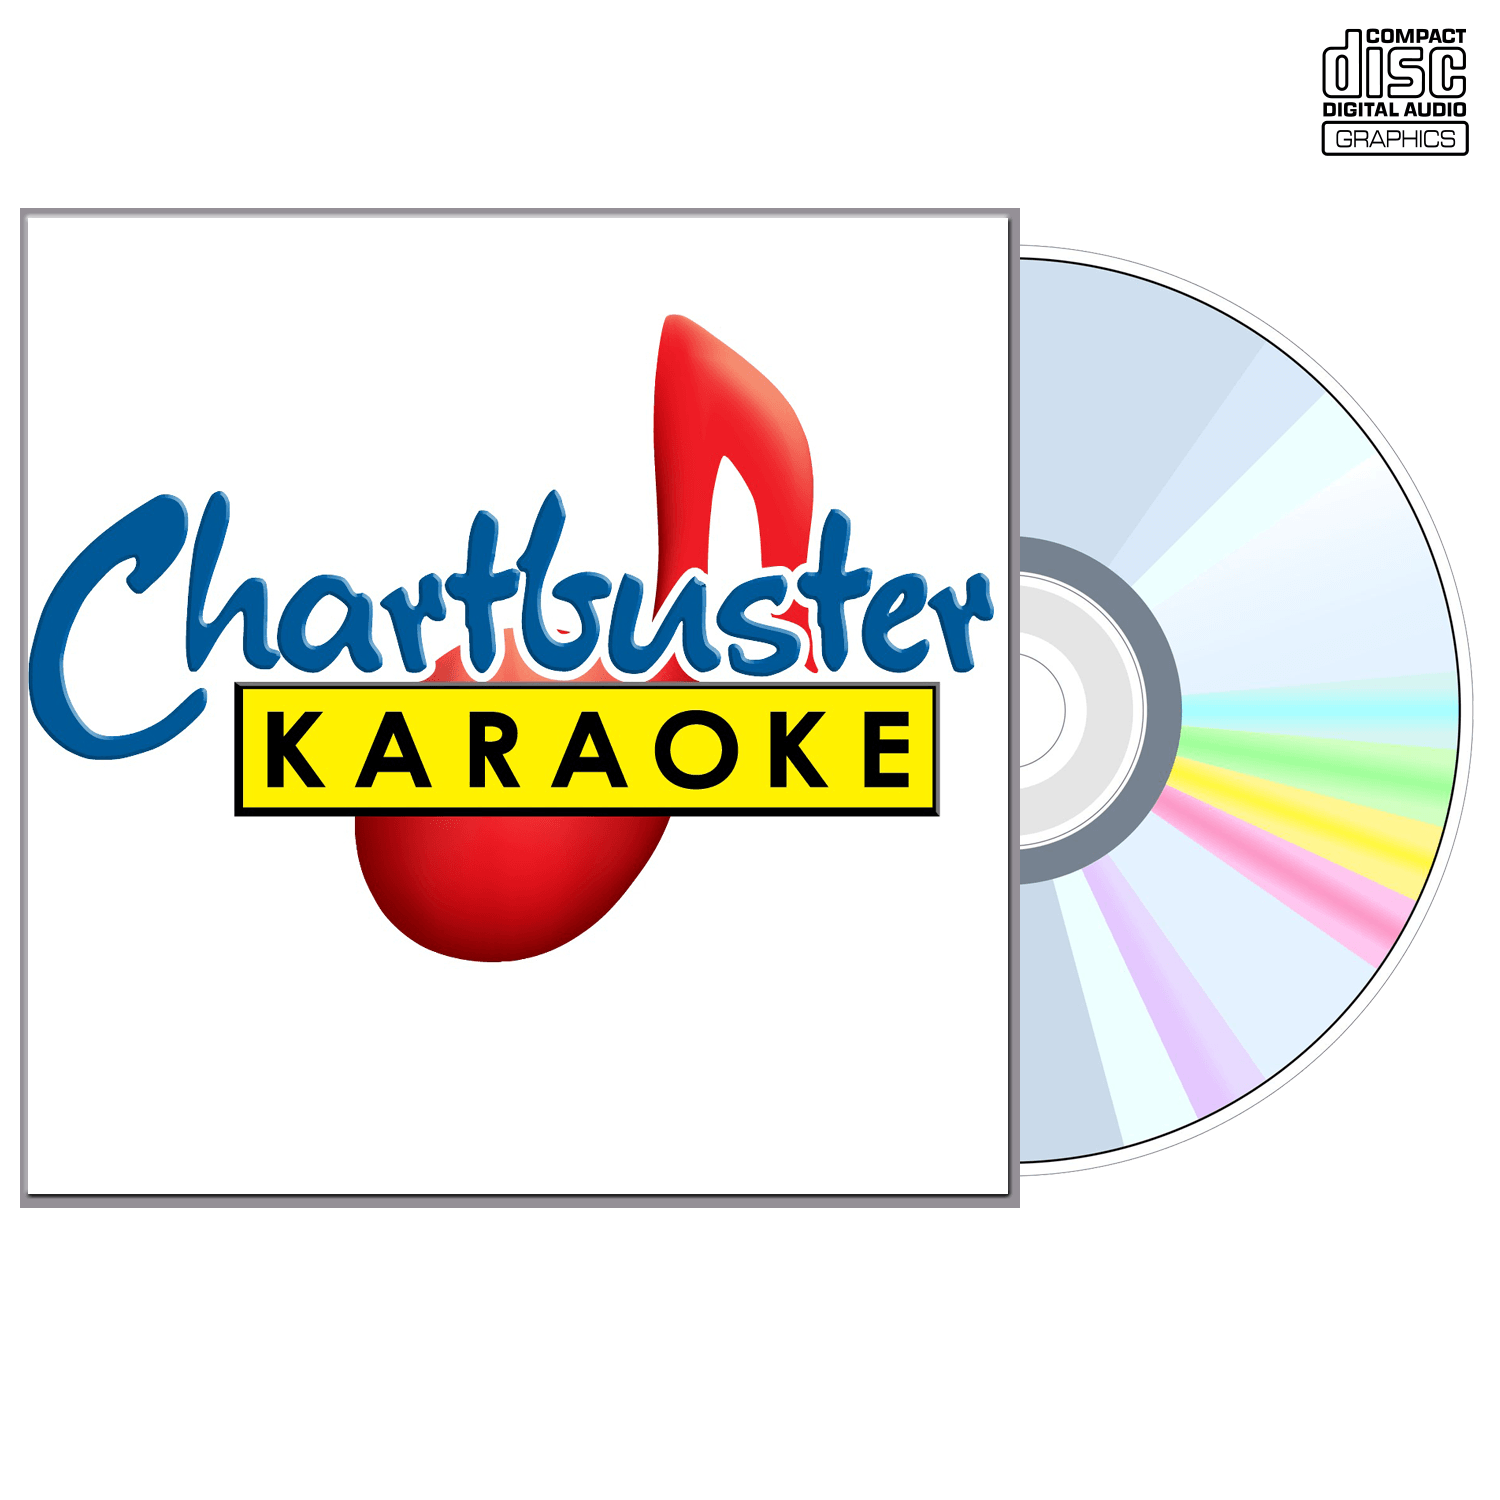 Wynonna Judd Vol 2 - CD+G - Chartbuster Karaoke - Karaoke Home Entertainment